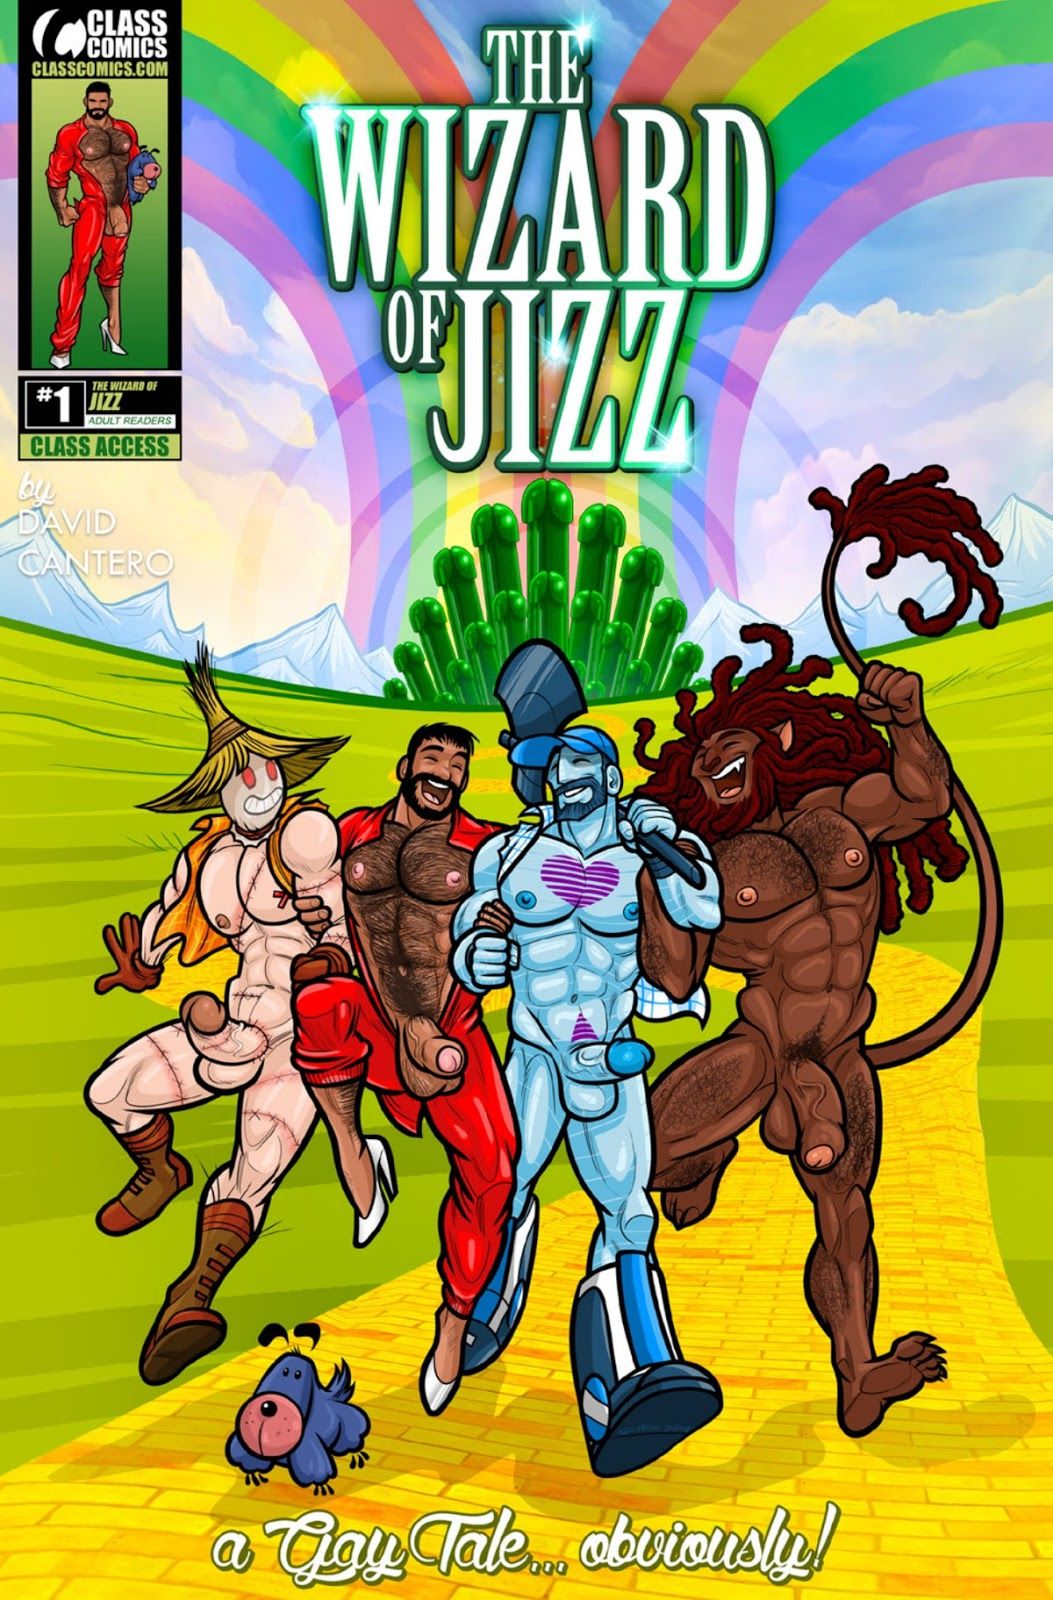 Wizard of Jizz - David Cantero page 1